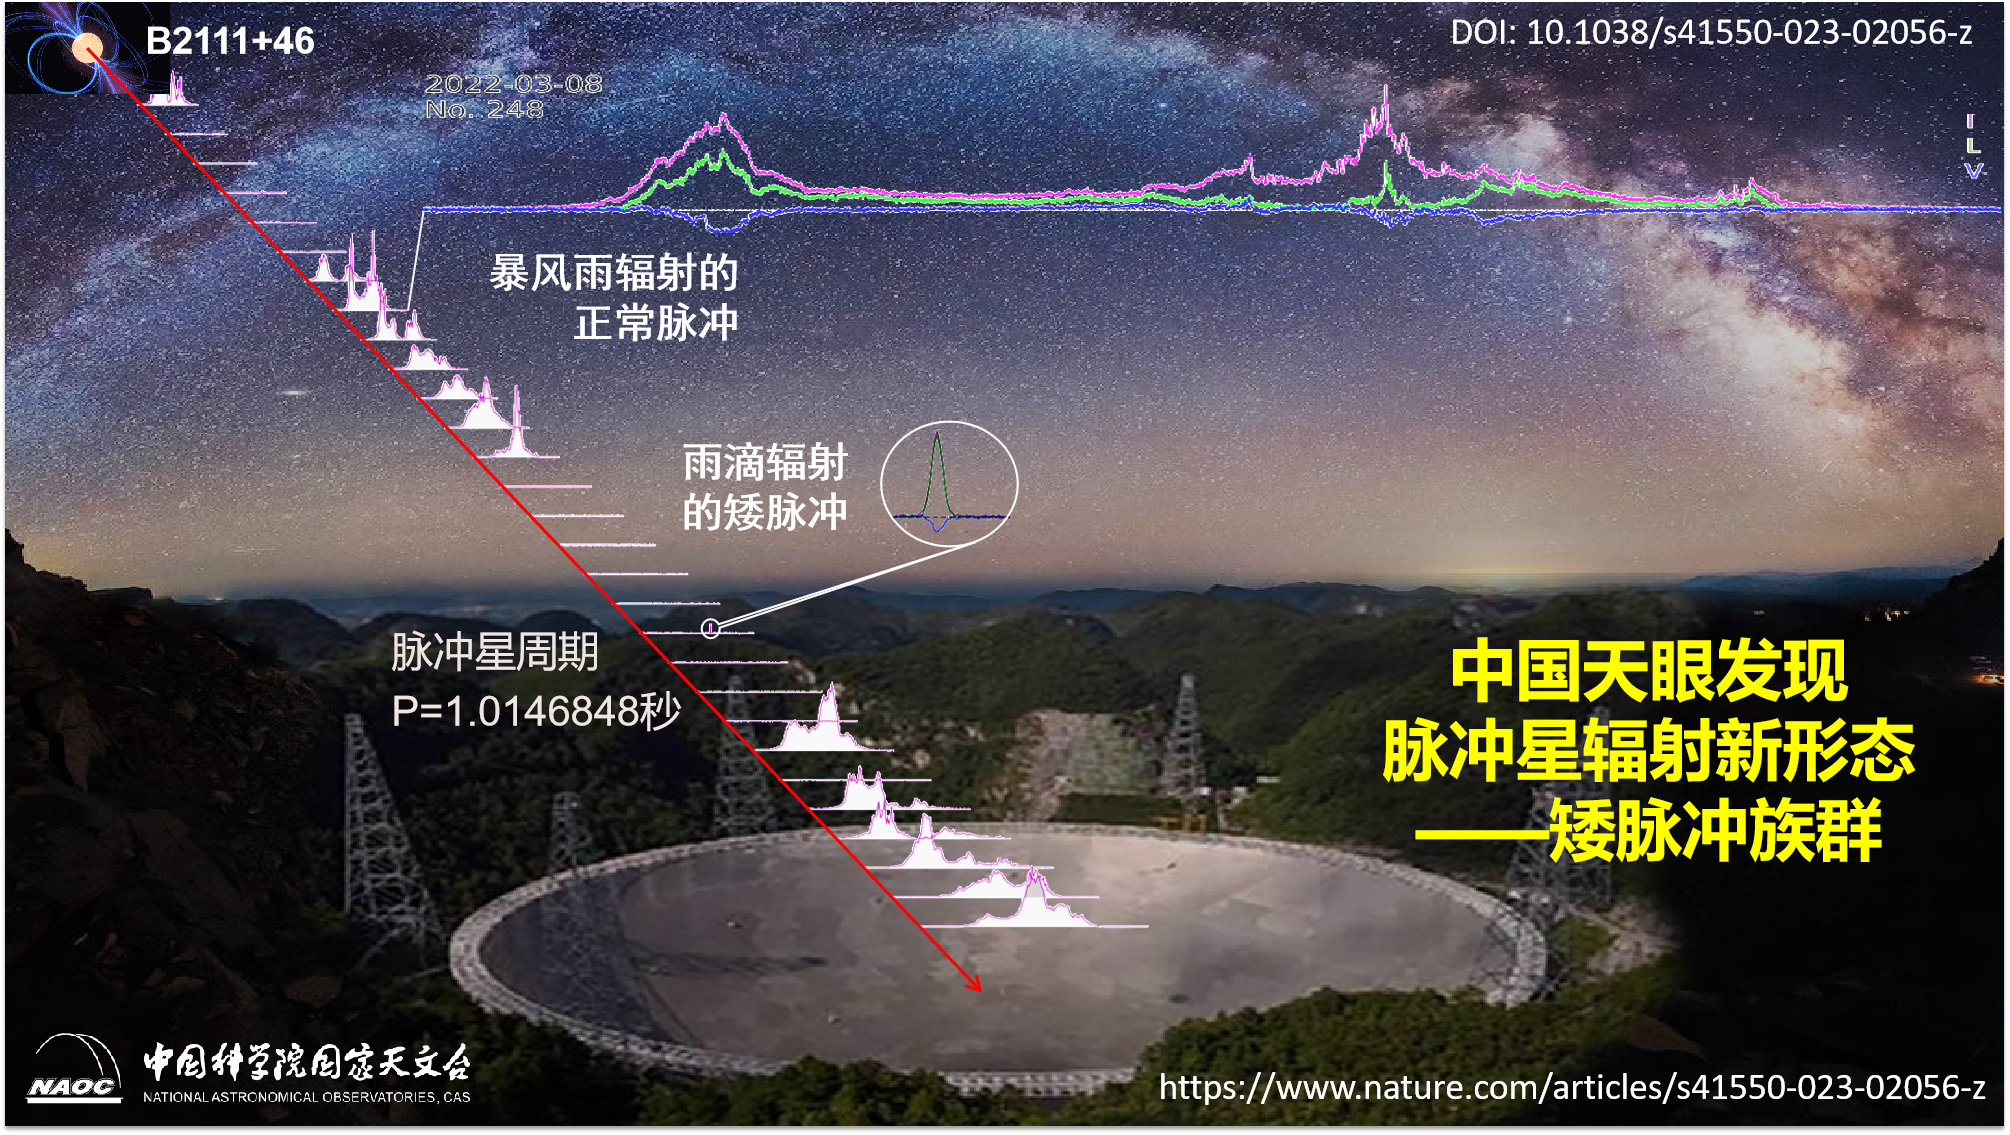 China's FAST telescope detects distinct dwarf pulses from a bright pulsar PSR B2111+46. /NAOC